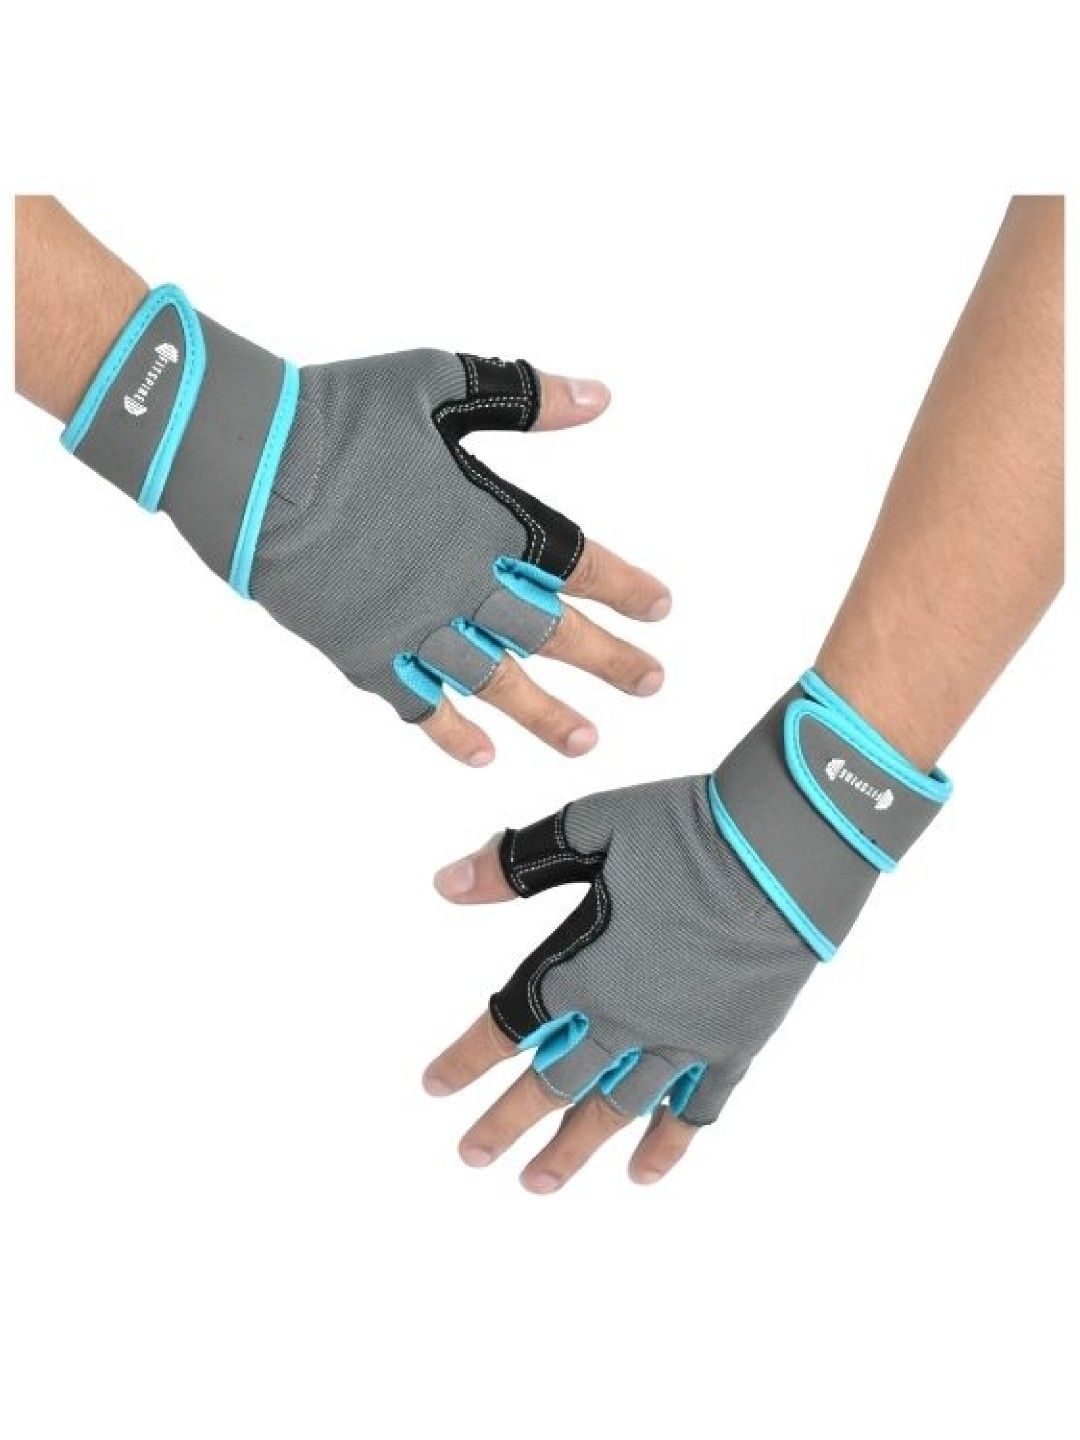 Sunbeams Lifestyle Fitspire Training Gloves Microfiber Workout Equipment (Men)